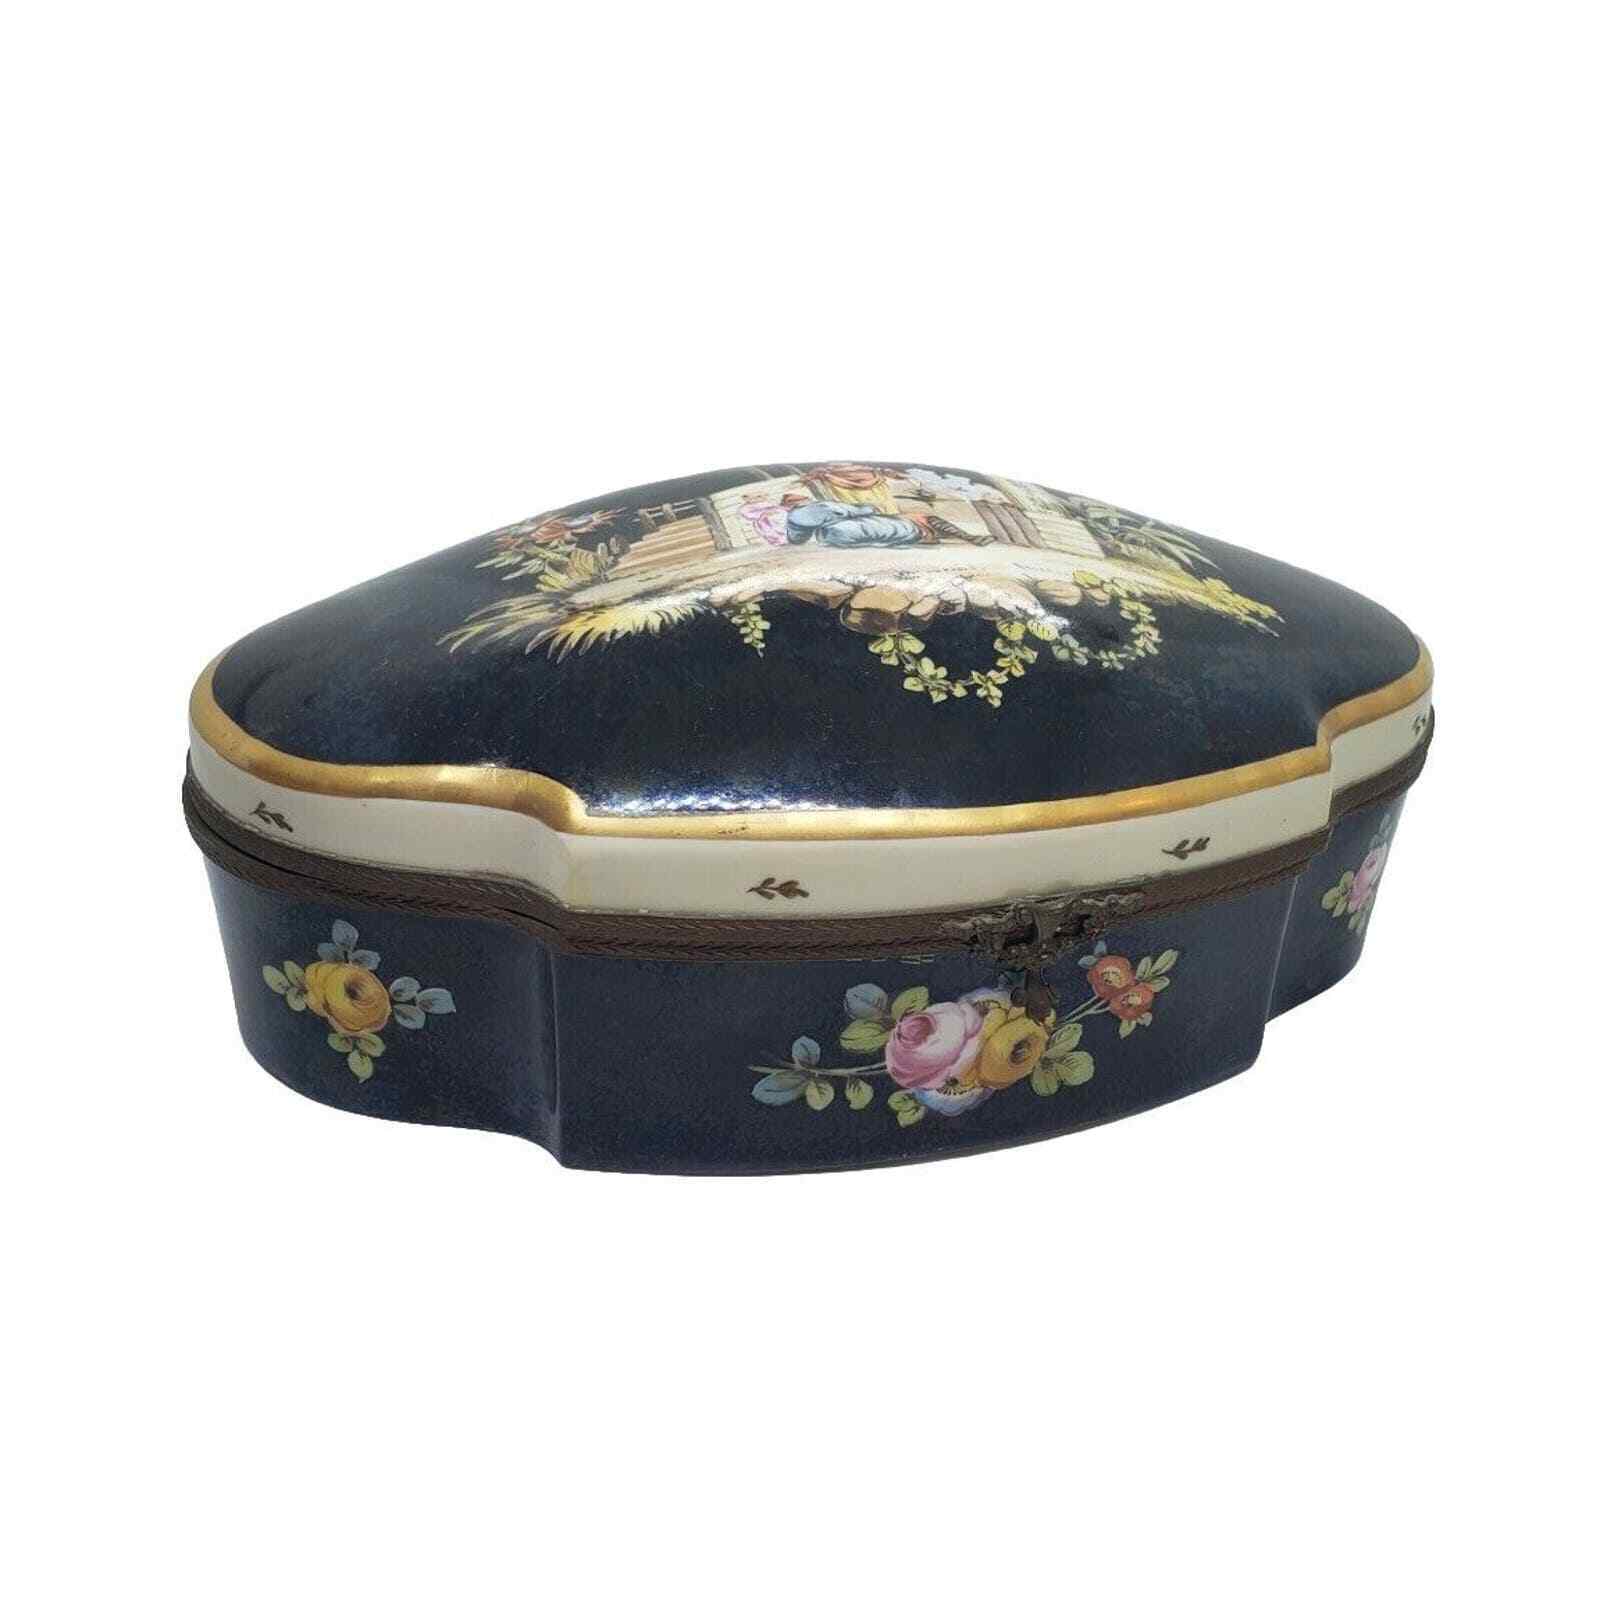 Antique Sevres Style Porcelain Jewelry Casket Box Hand Paint Flowers Asia Scene